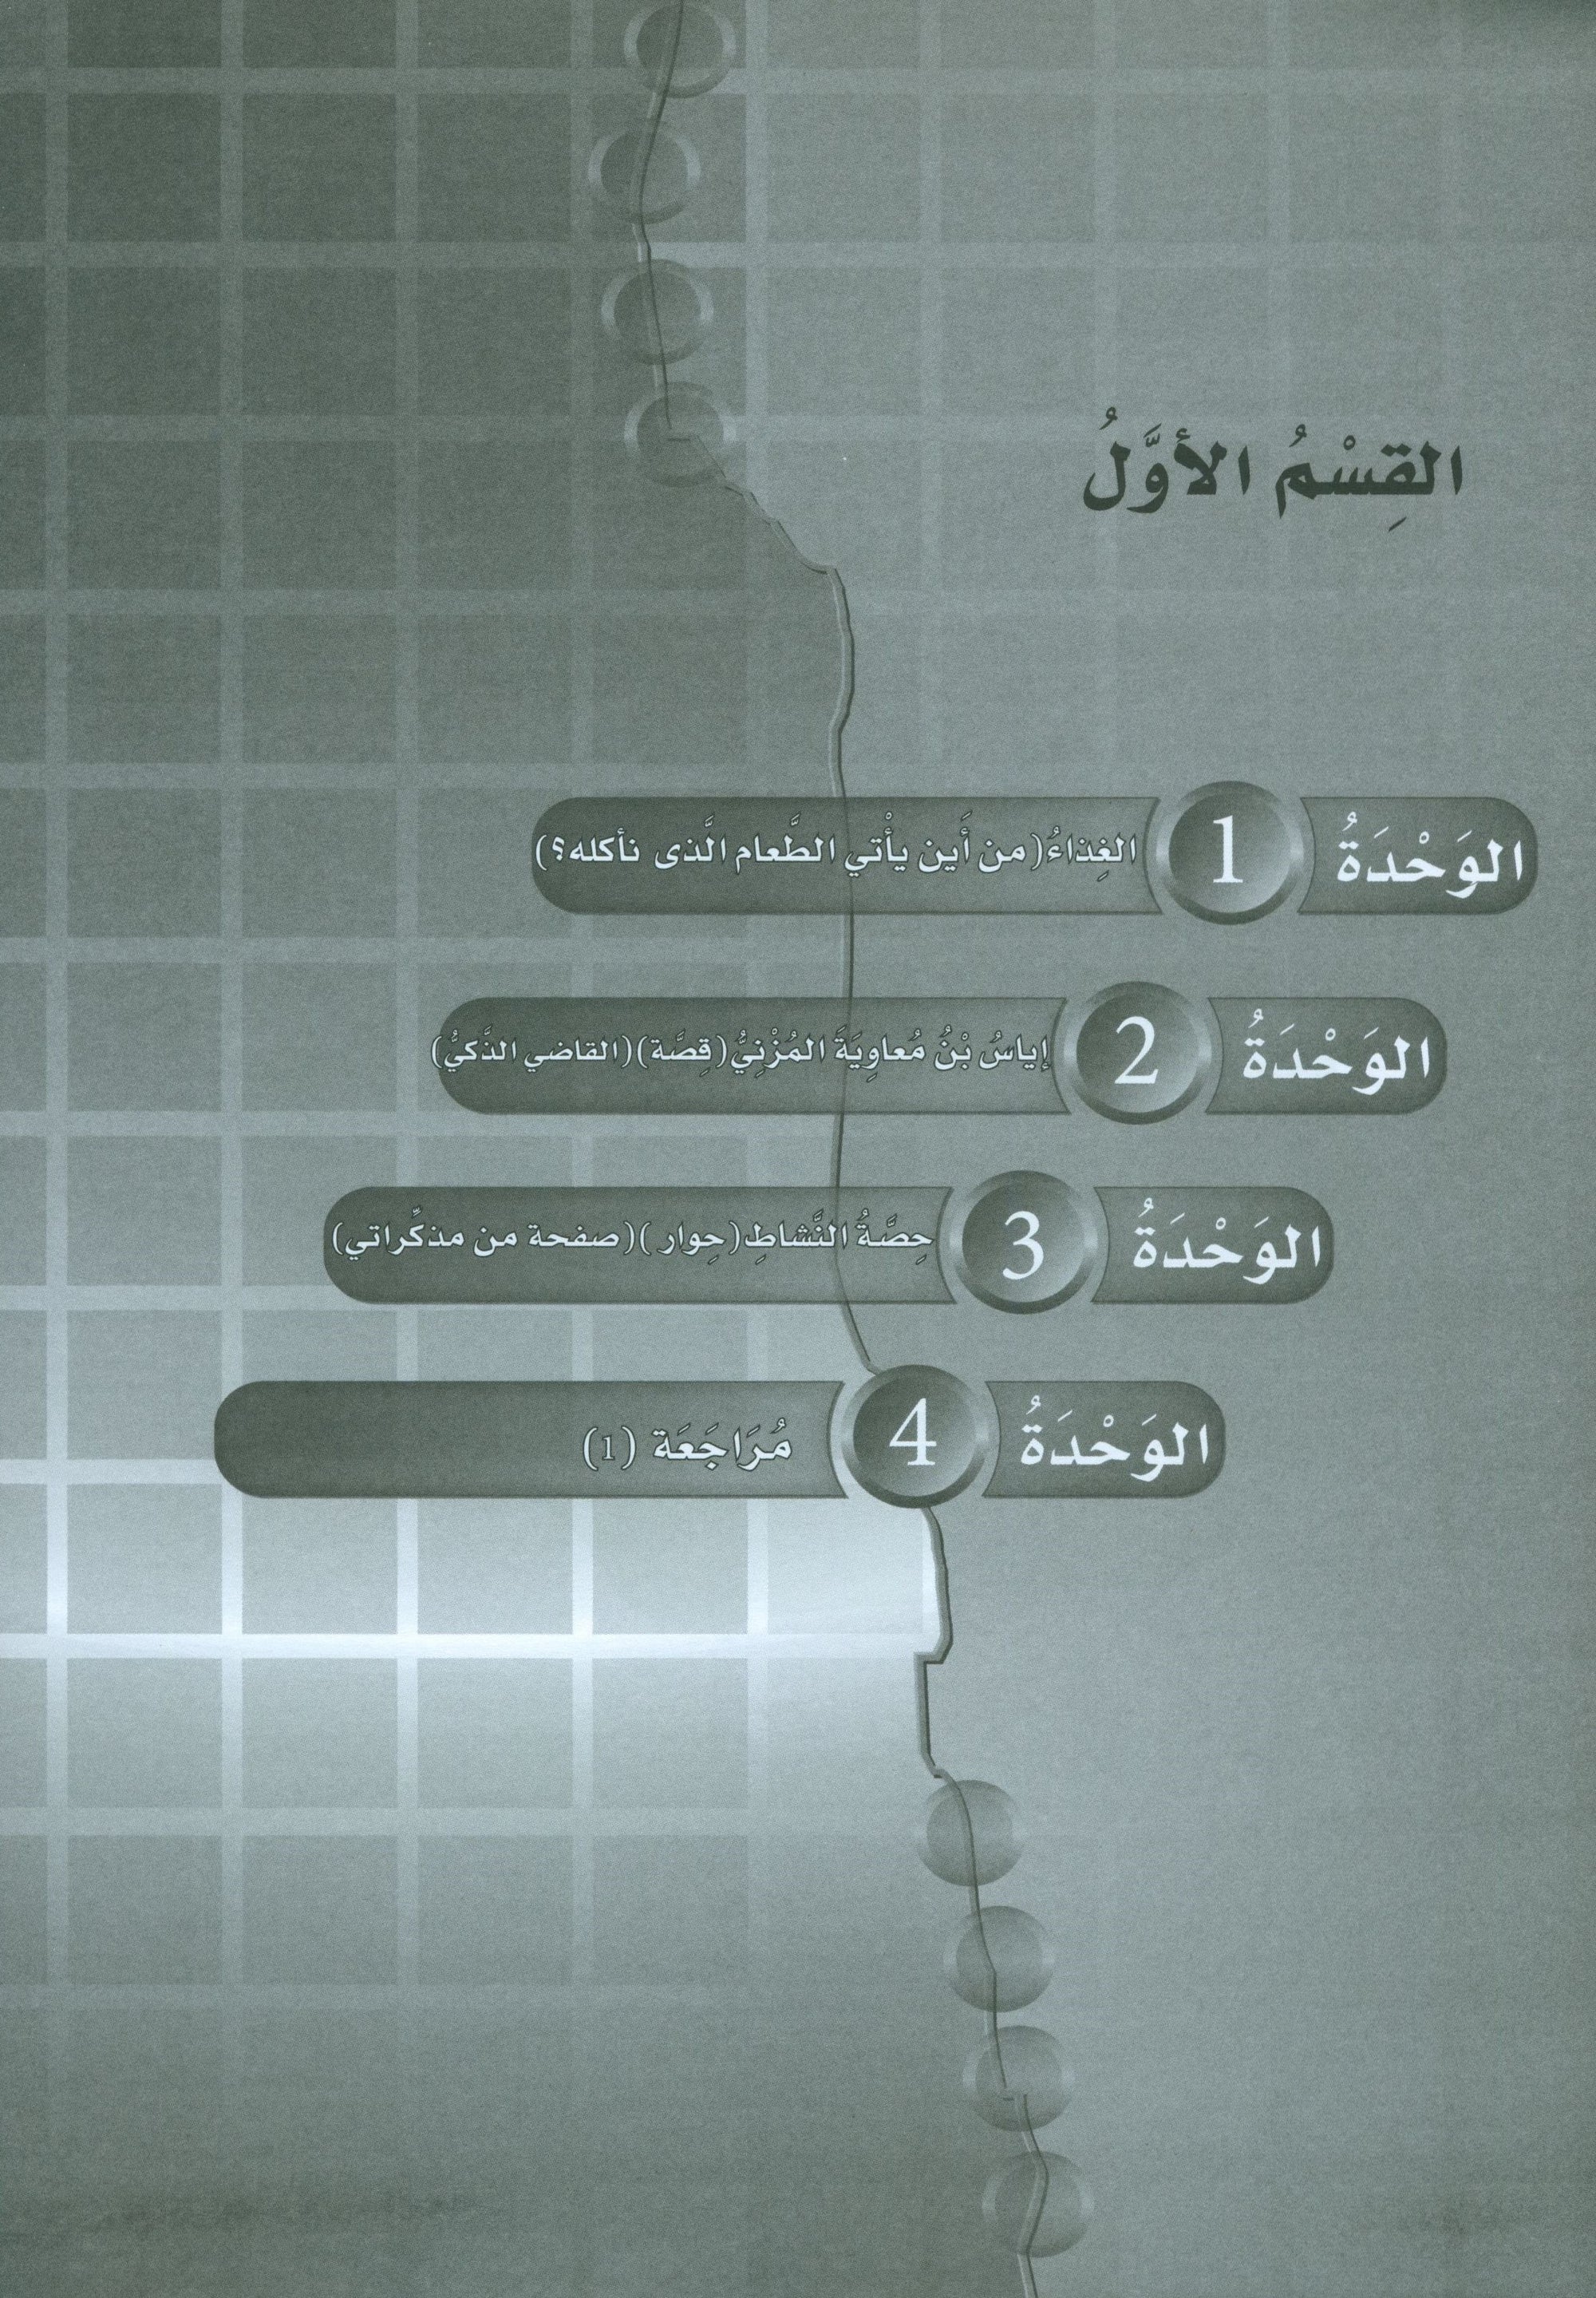 ICO Learn Arabic Workbook Level 6 (Combined Edition) تعلم العربية كتاب النشاط